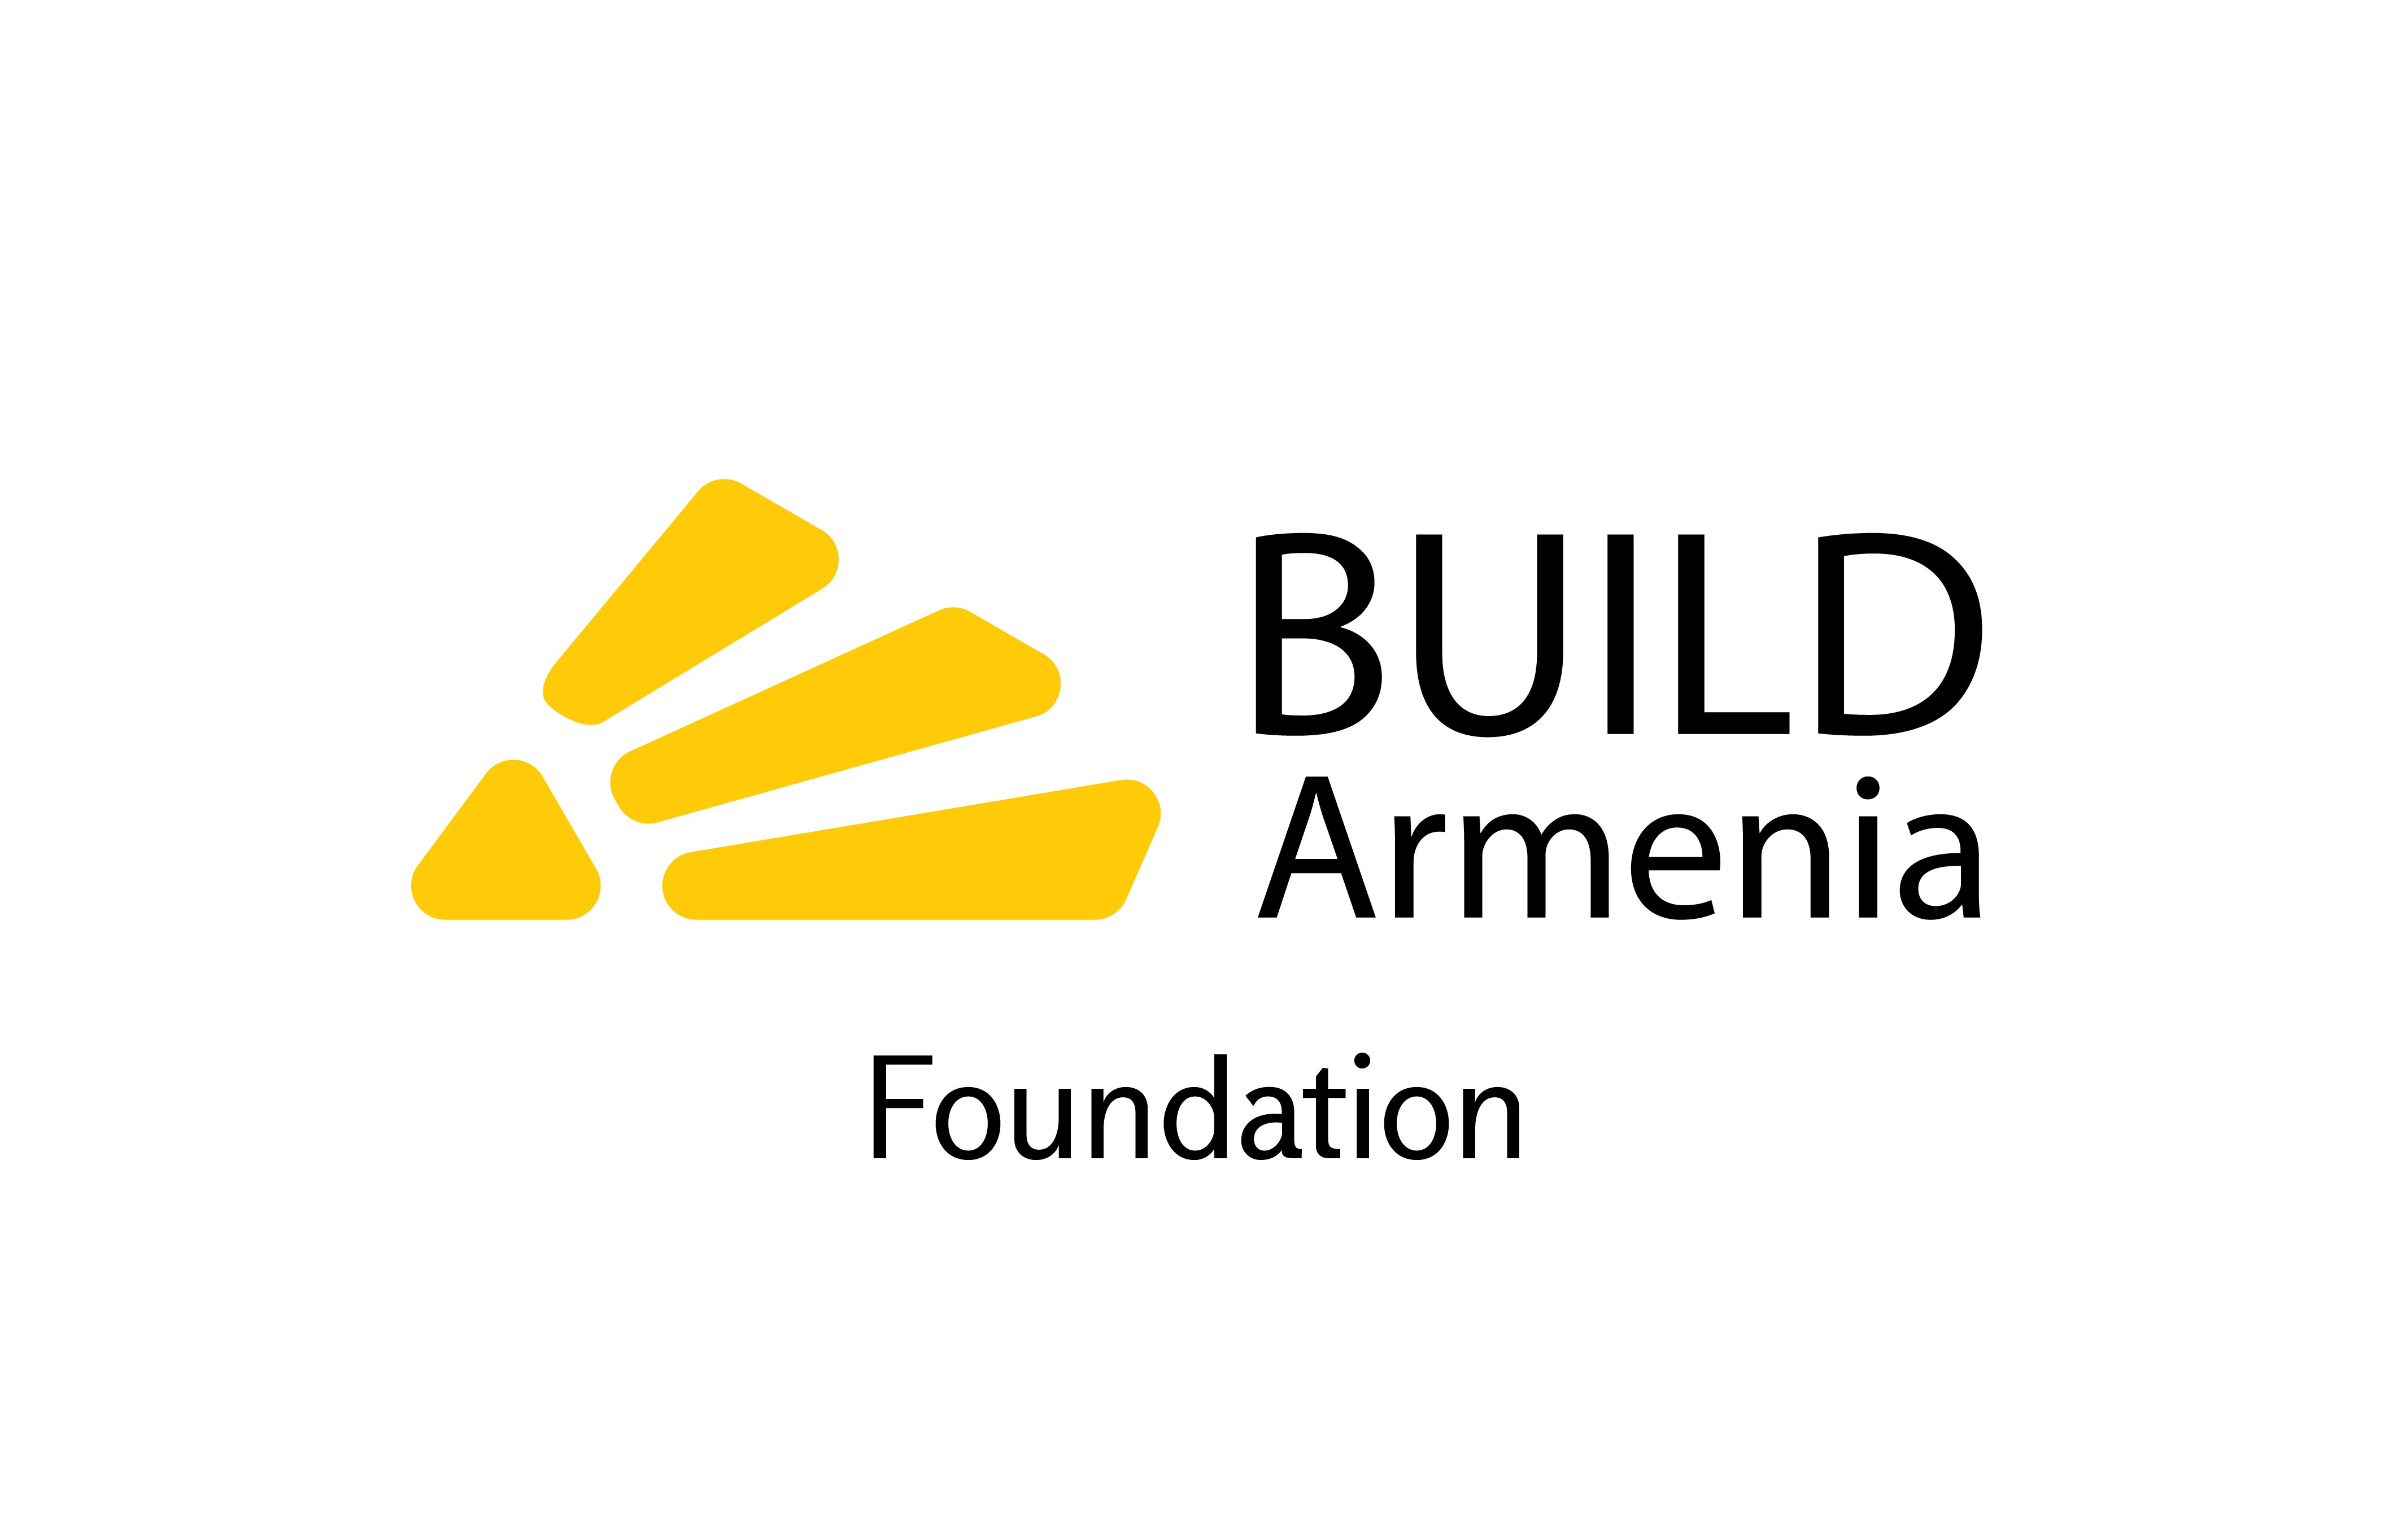 The foundation “Build Armenia” starts its activities